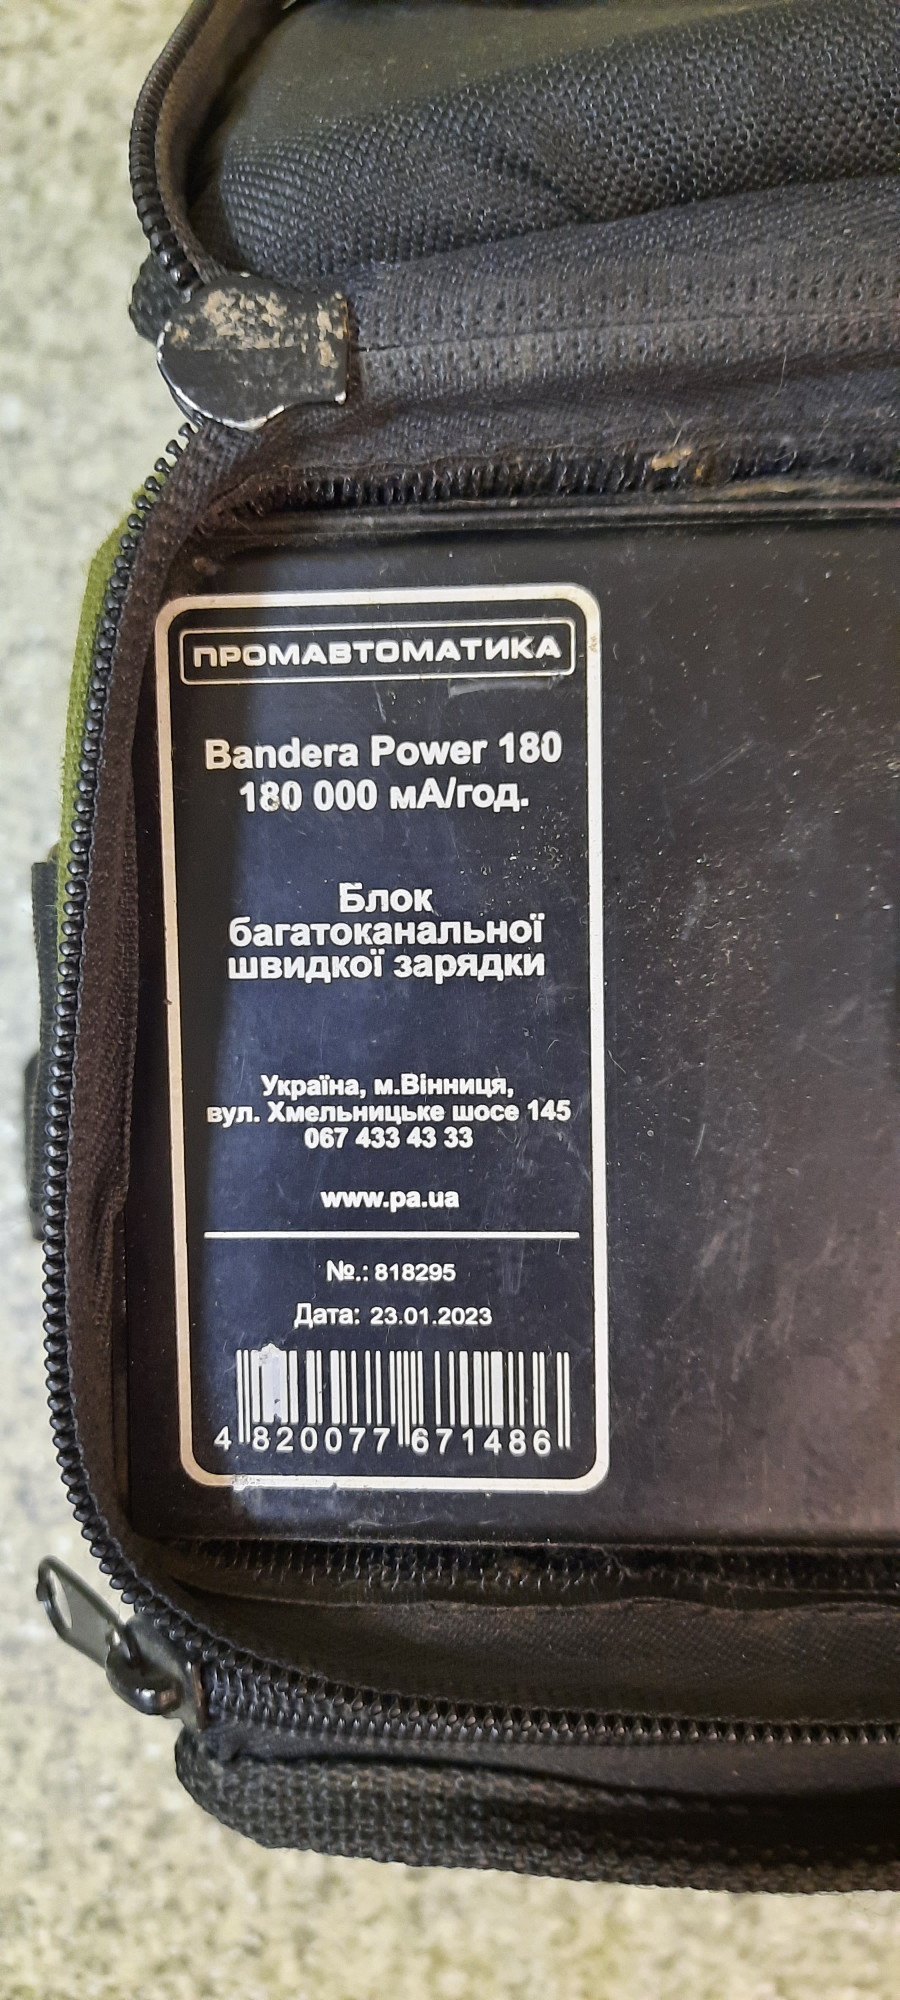 Зарядная станция ПромАвтоматика Bandera Power 180 2